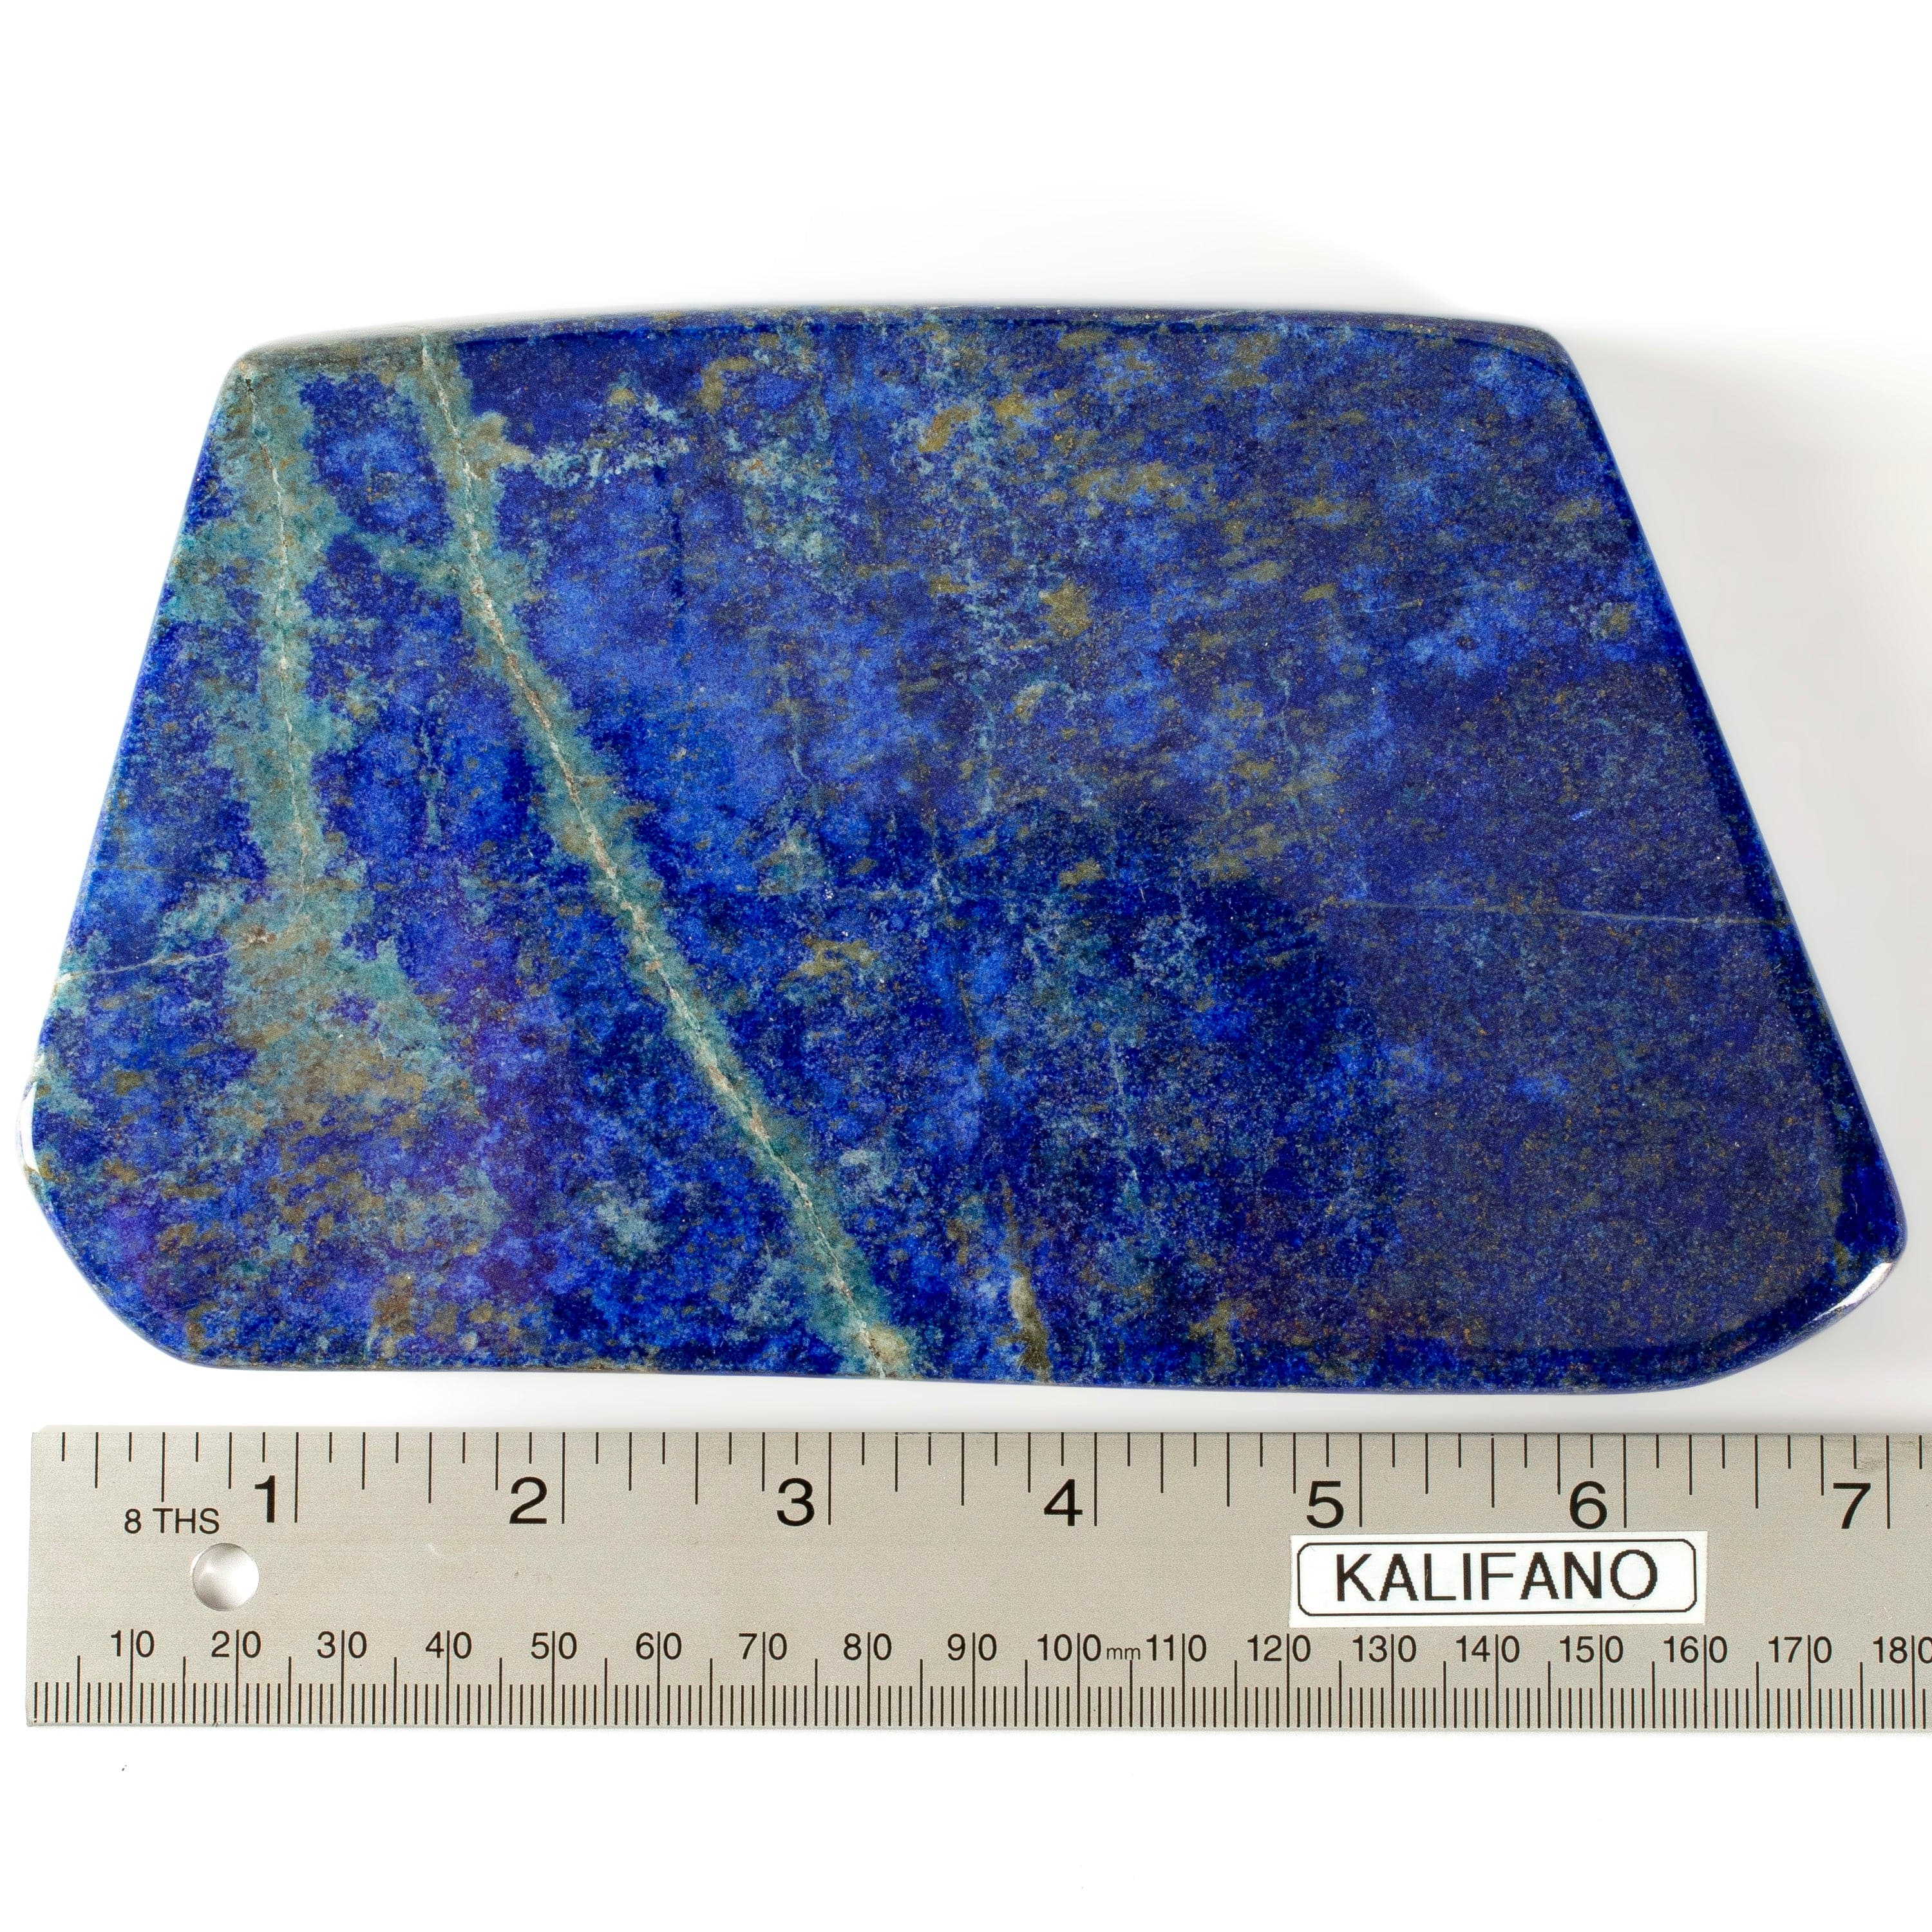 Kalifano Lapis Lapis Lazuli Freeform from Afghanistan - 7" / 1,030 grams LP1050.001